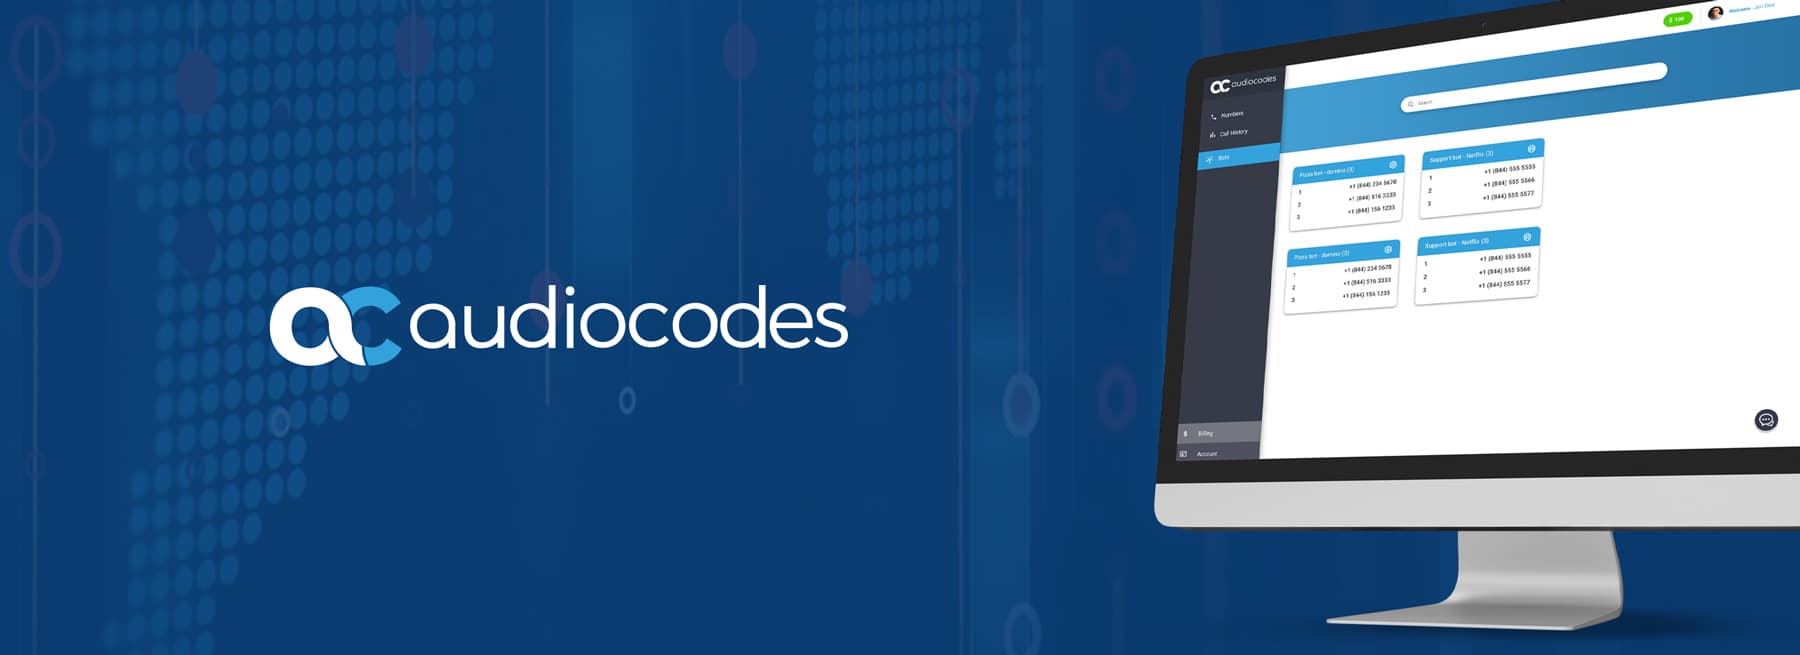 audiocodes platform